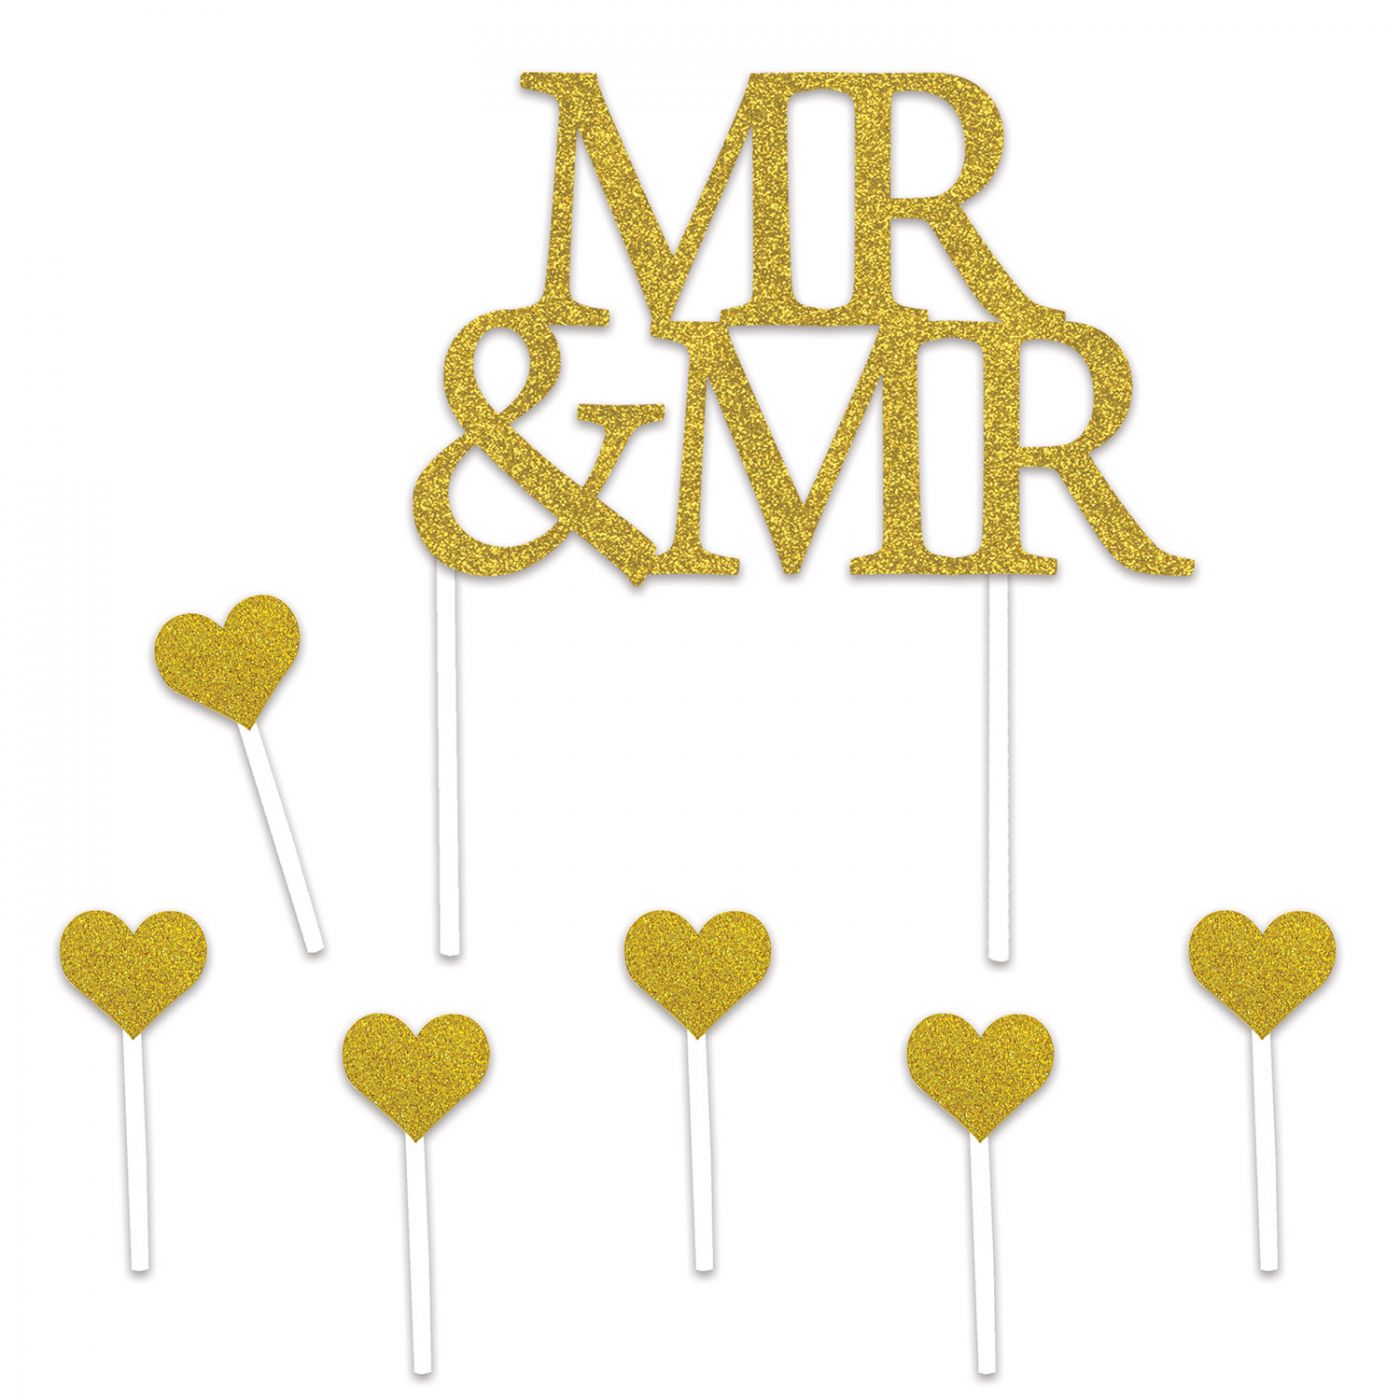 Mr & Mr Cake Topper image